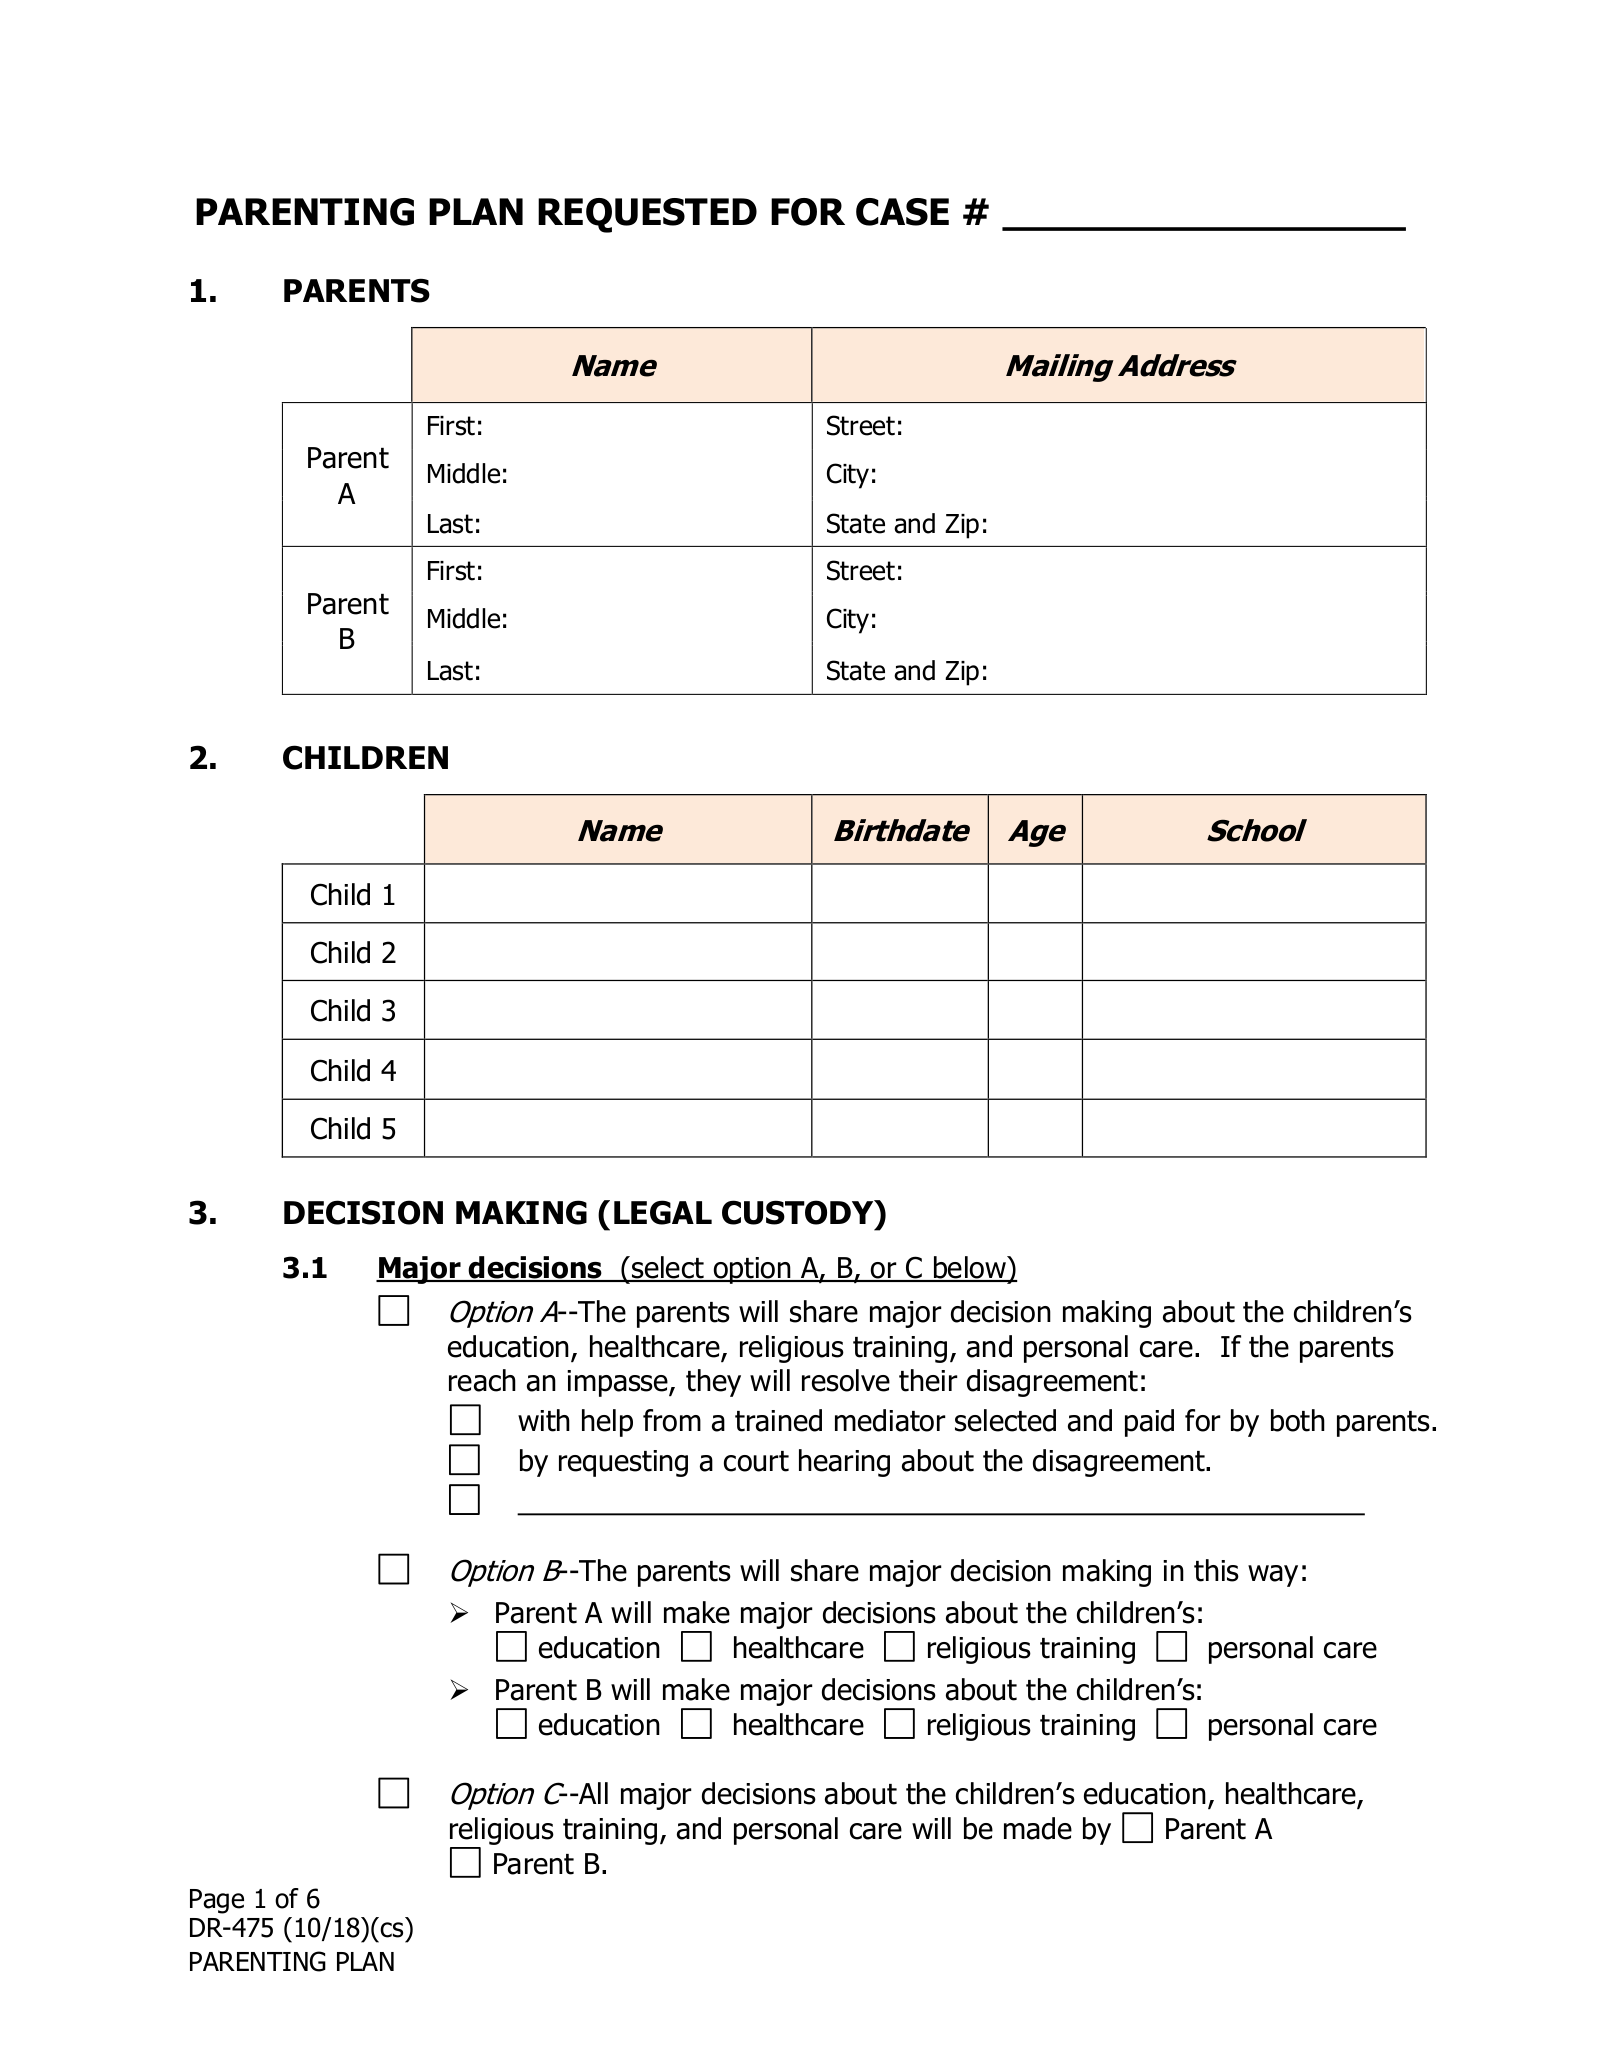 Alaska Custody (Parenting Plan) Agreement | Form DR-475